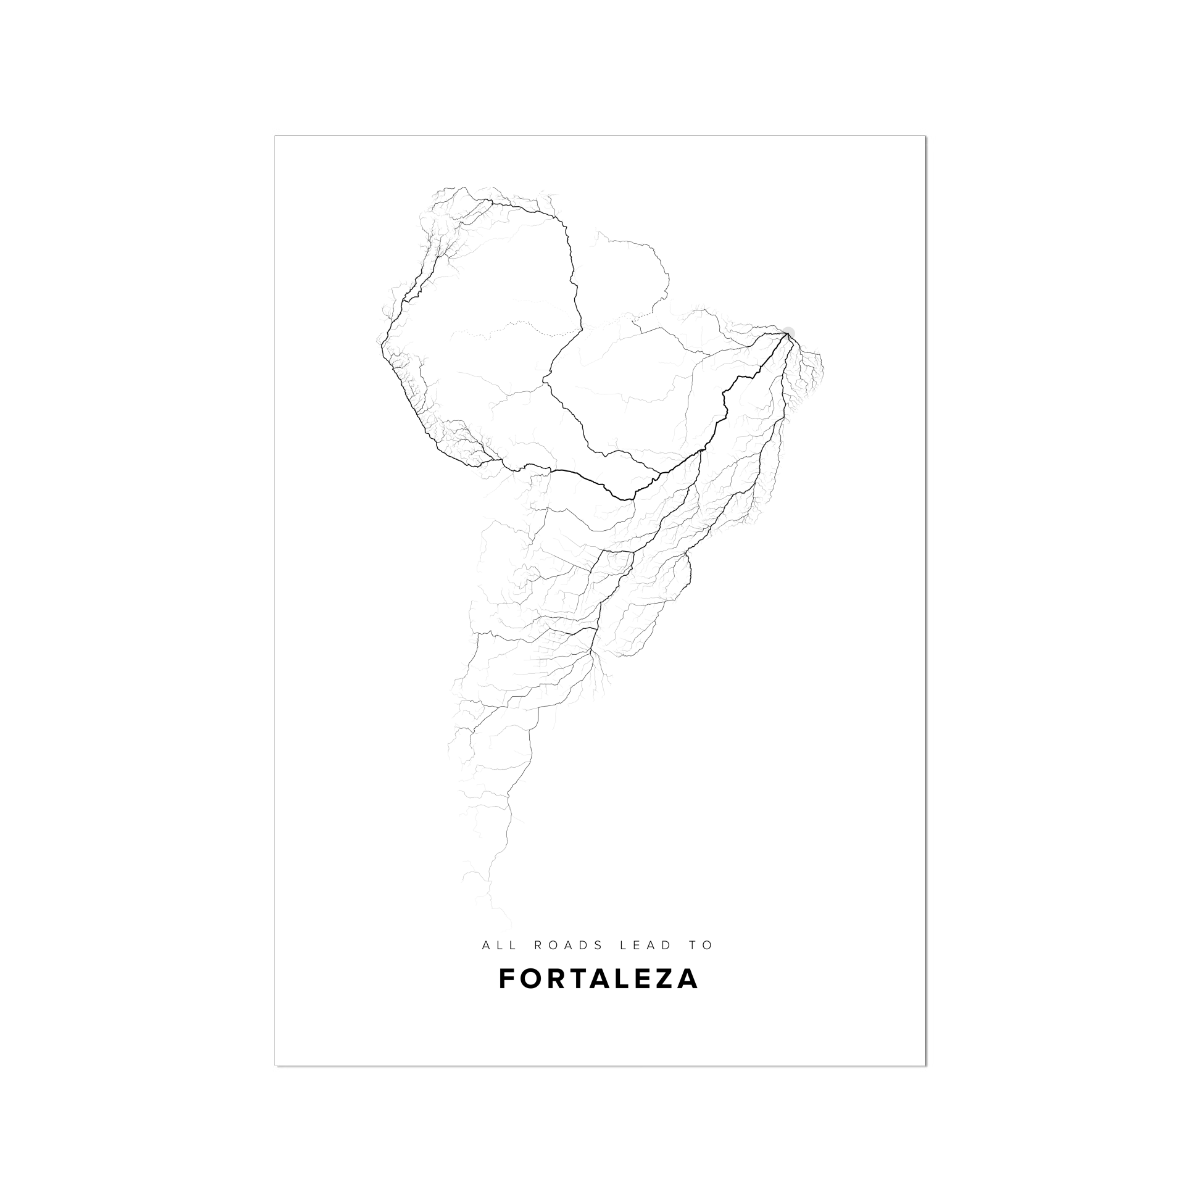 All roads lead to Fortaleza (Brazil) Fine Art Map Print